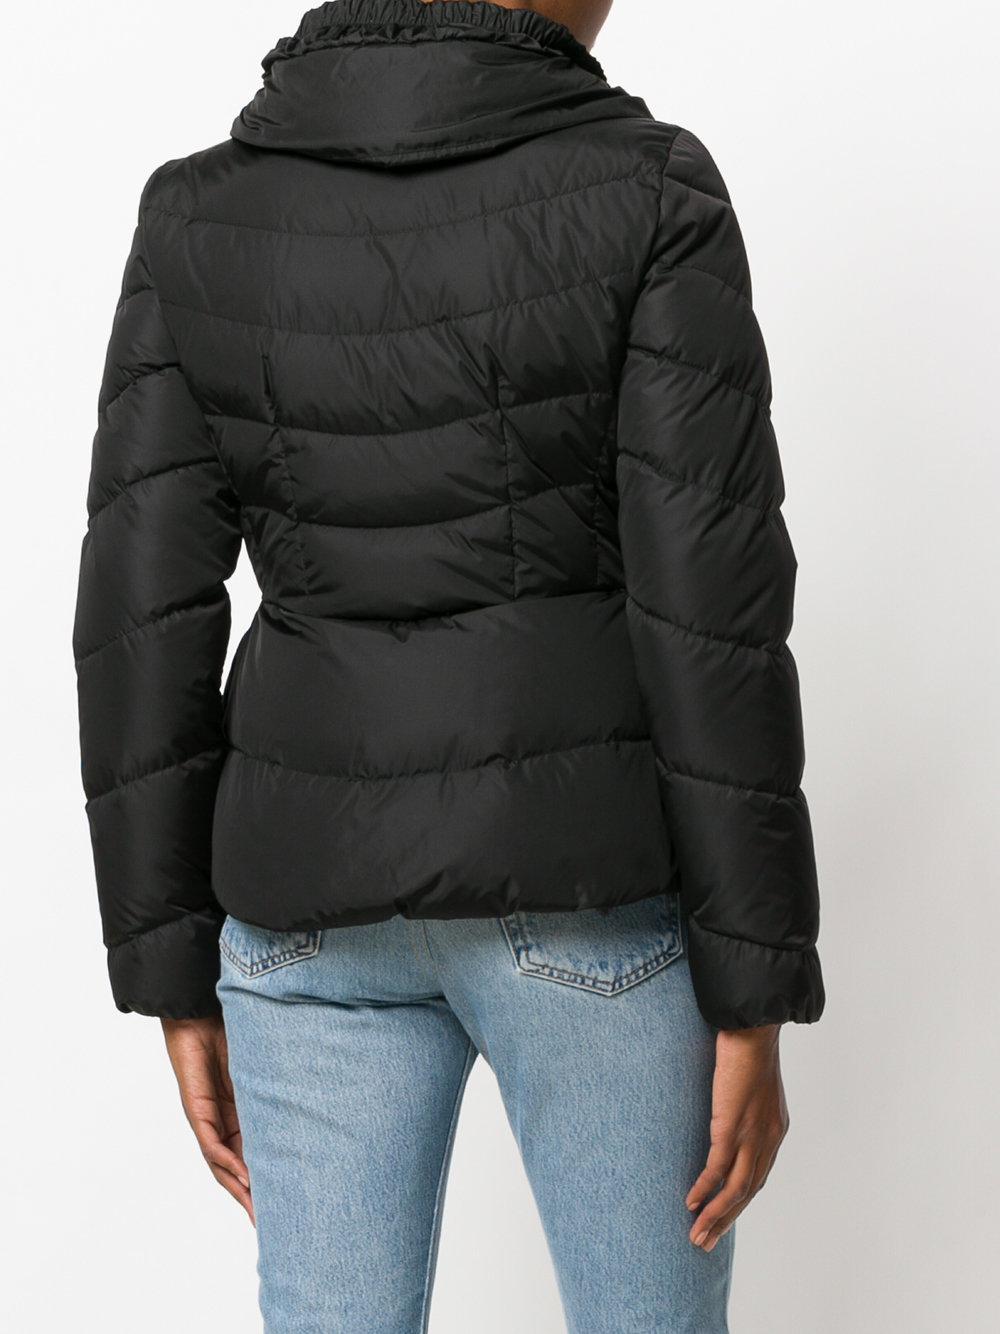 Lyst - Moncler Miriel Jacket in Black